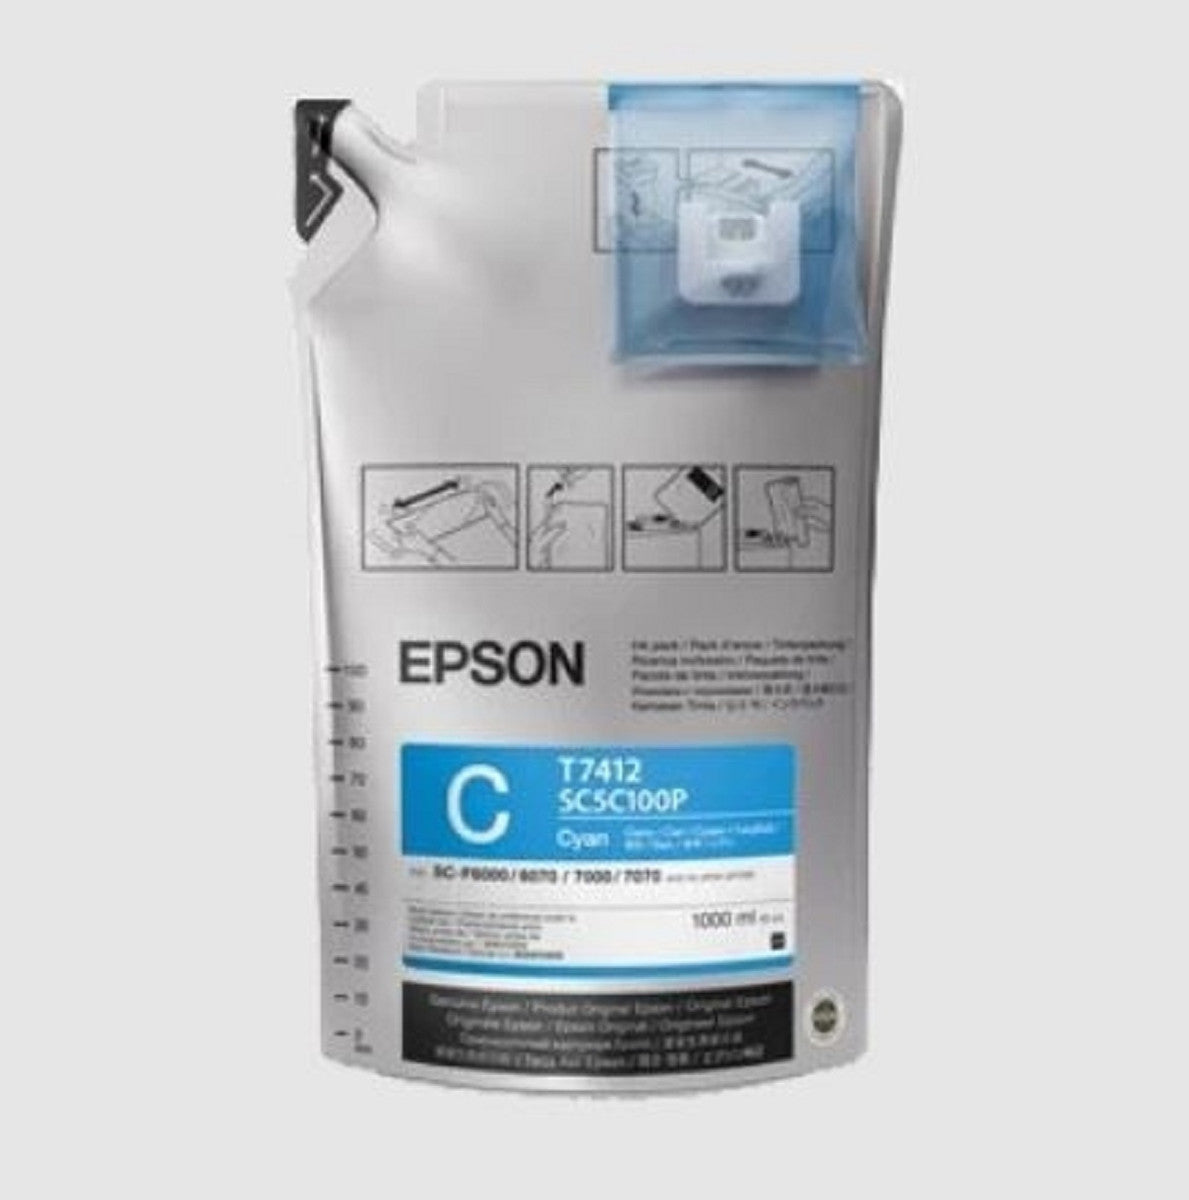 epson T741 Ink Bag - Cyan